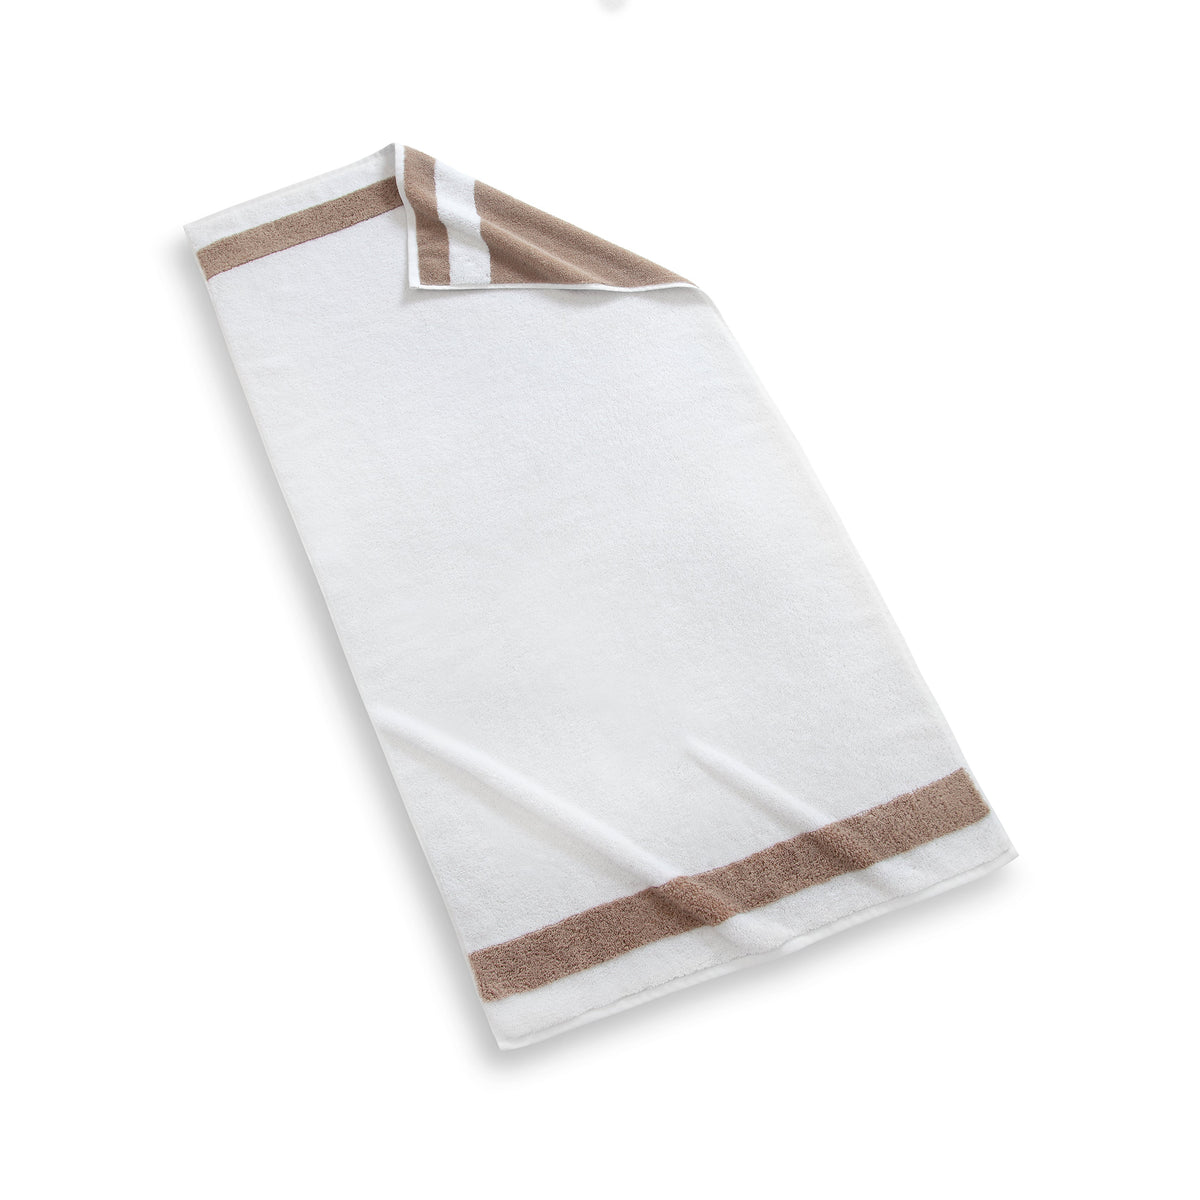 Sedona Towels